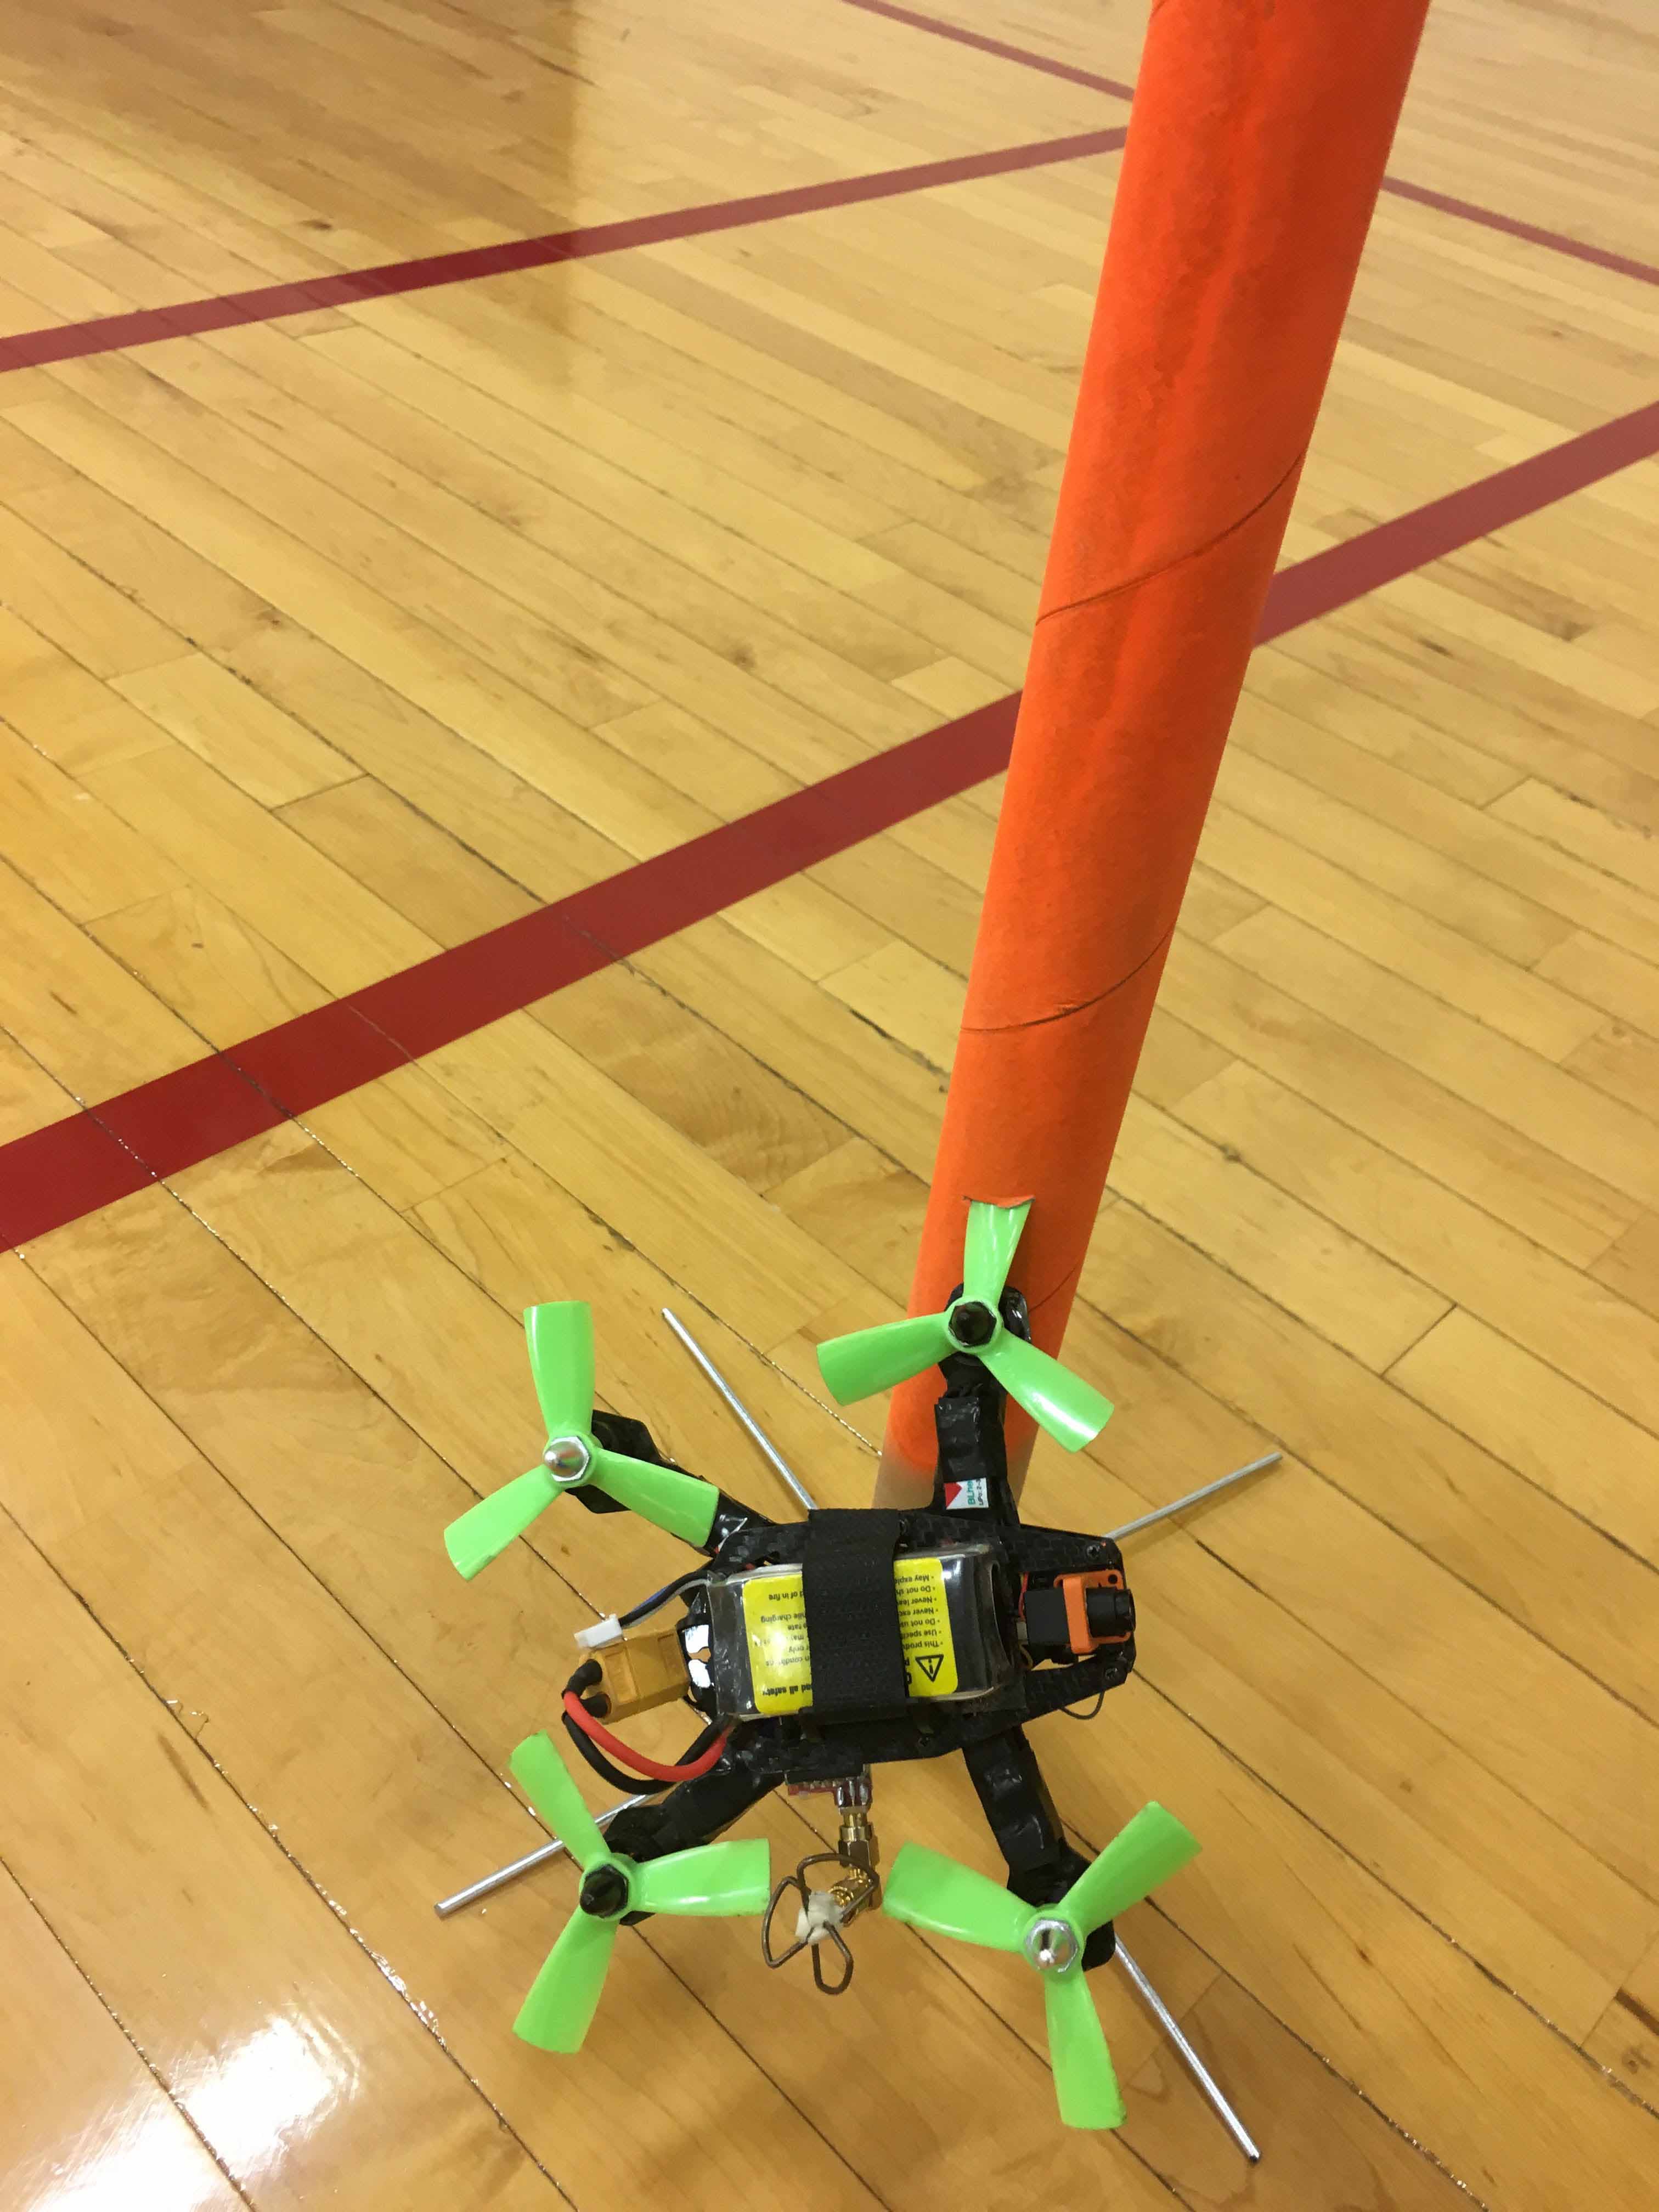 Quad Indoor Flying at Mississauga Valleys Gymnasium